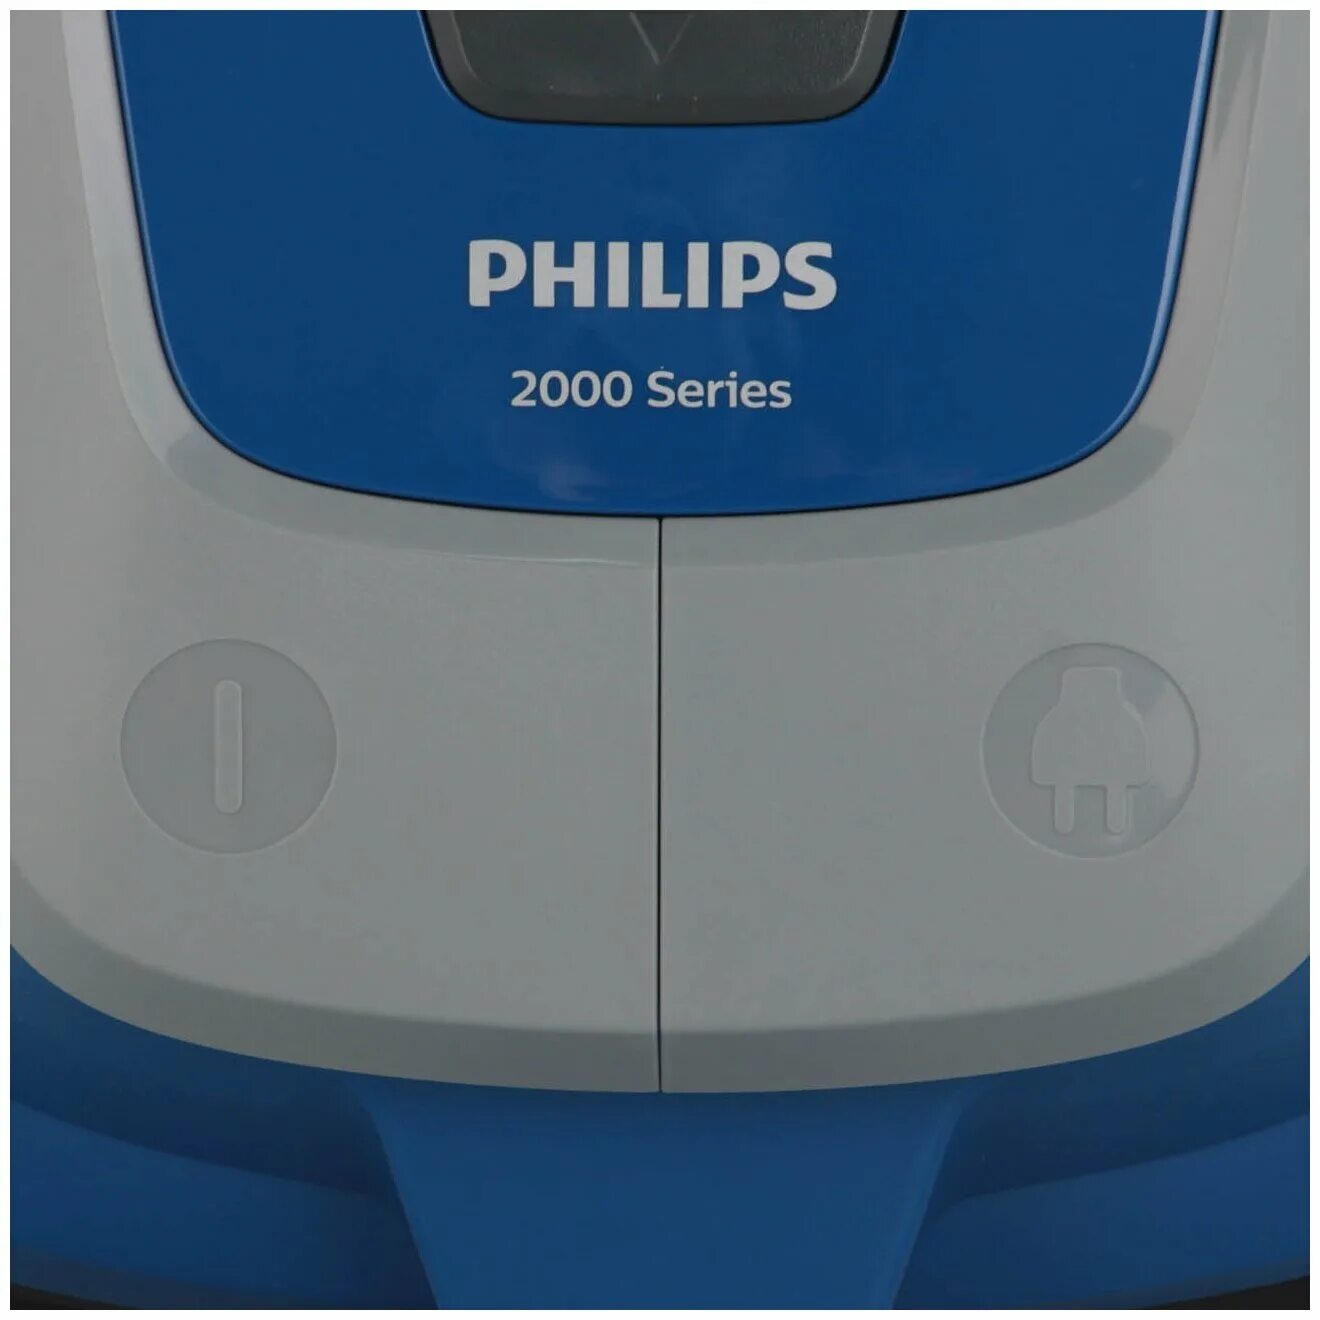 2000 series xb2042 01. Пылесос Philips xb2062/01. Philips xb2022/xb2023. Пылесос Philips xb2022. Пылесос с контейнером для пыли Philips xb2062/01.